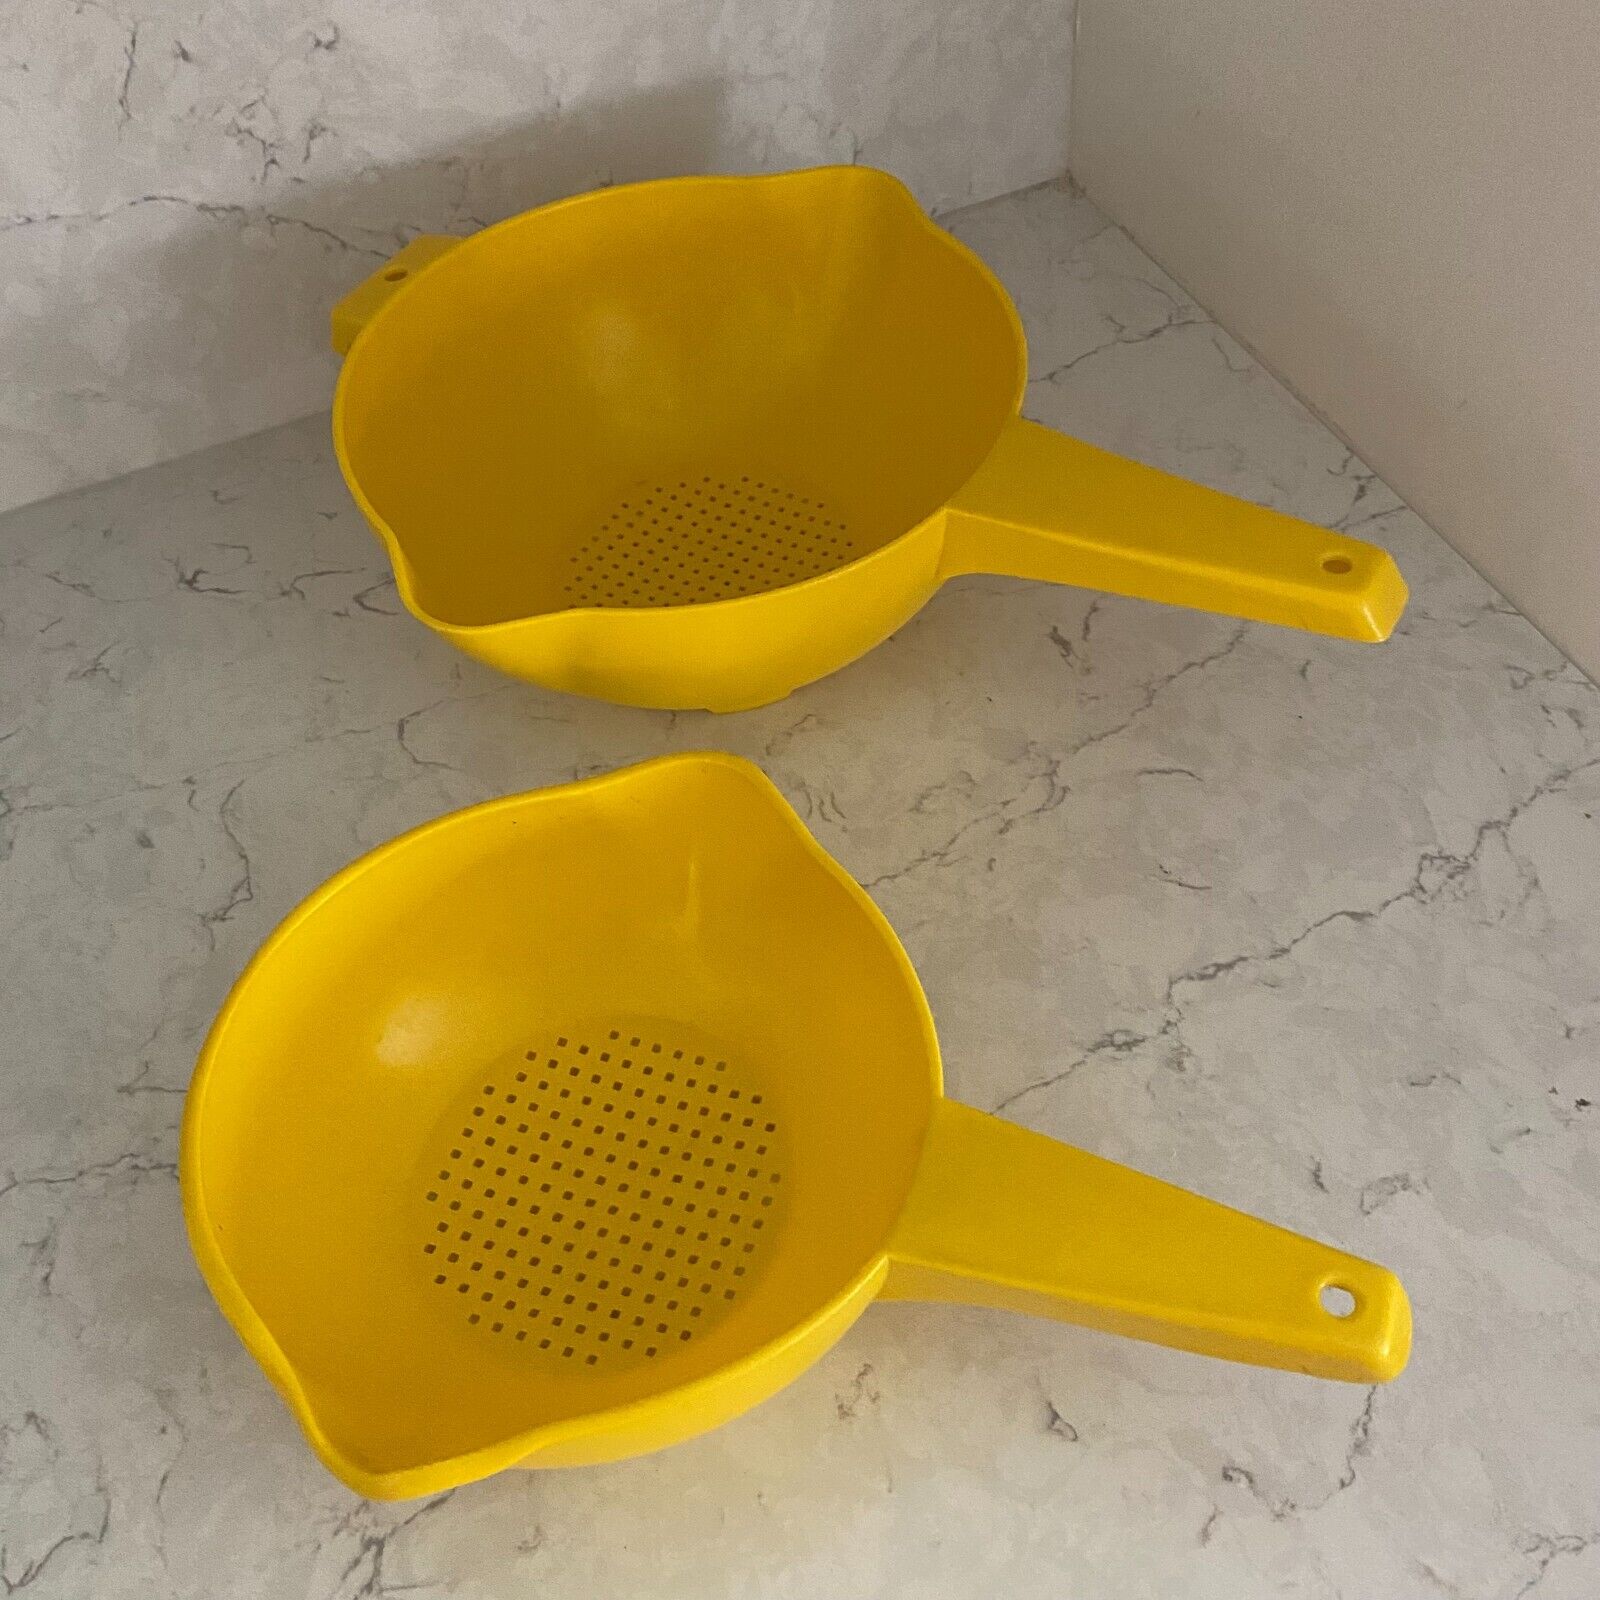 Vintage/Retro Tupperware Yellow Plastic Kitchenware Strainer Colander Set of 2